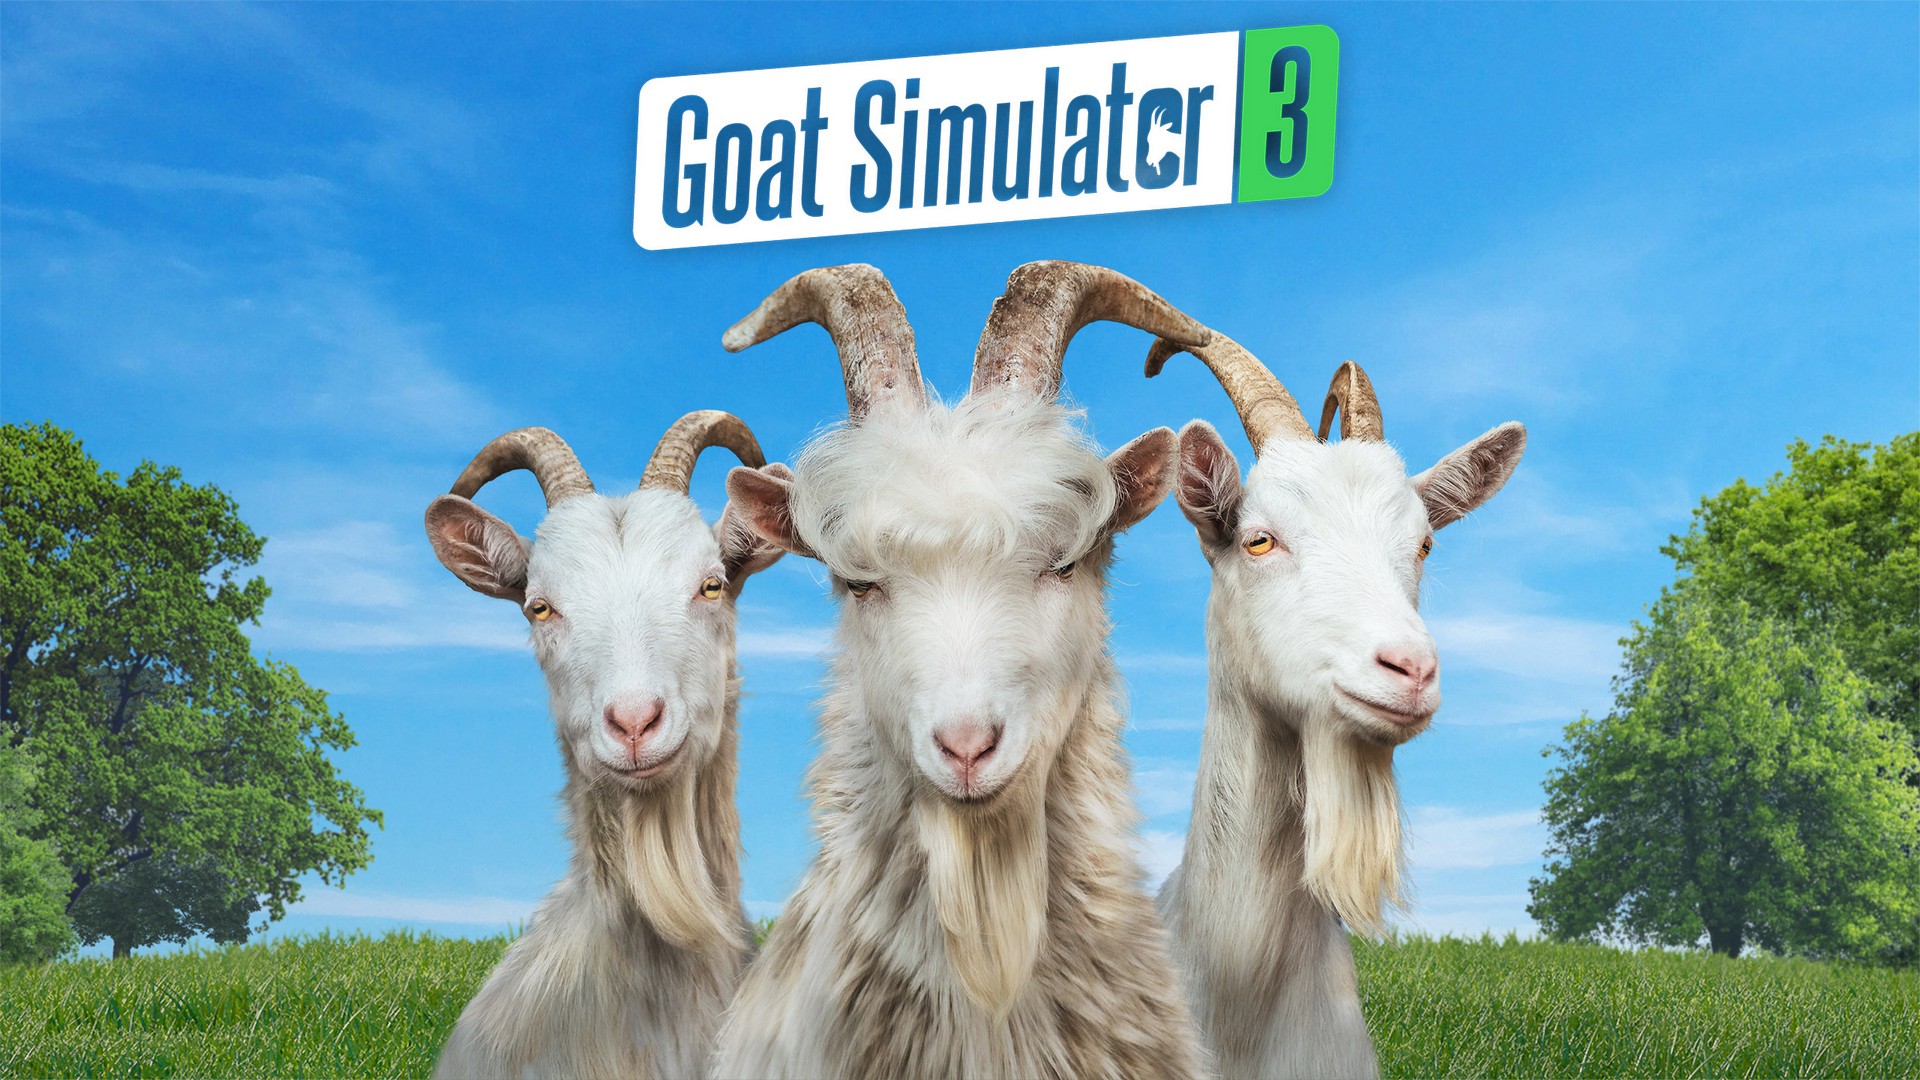 PILGOR’S BAAAAACK! Goat Simulator 3 Has Arrived On PC & Consoles